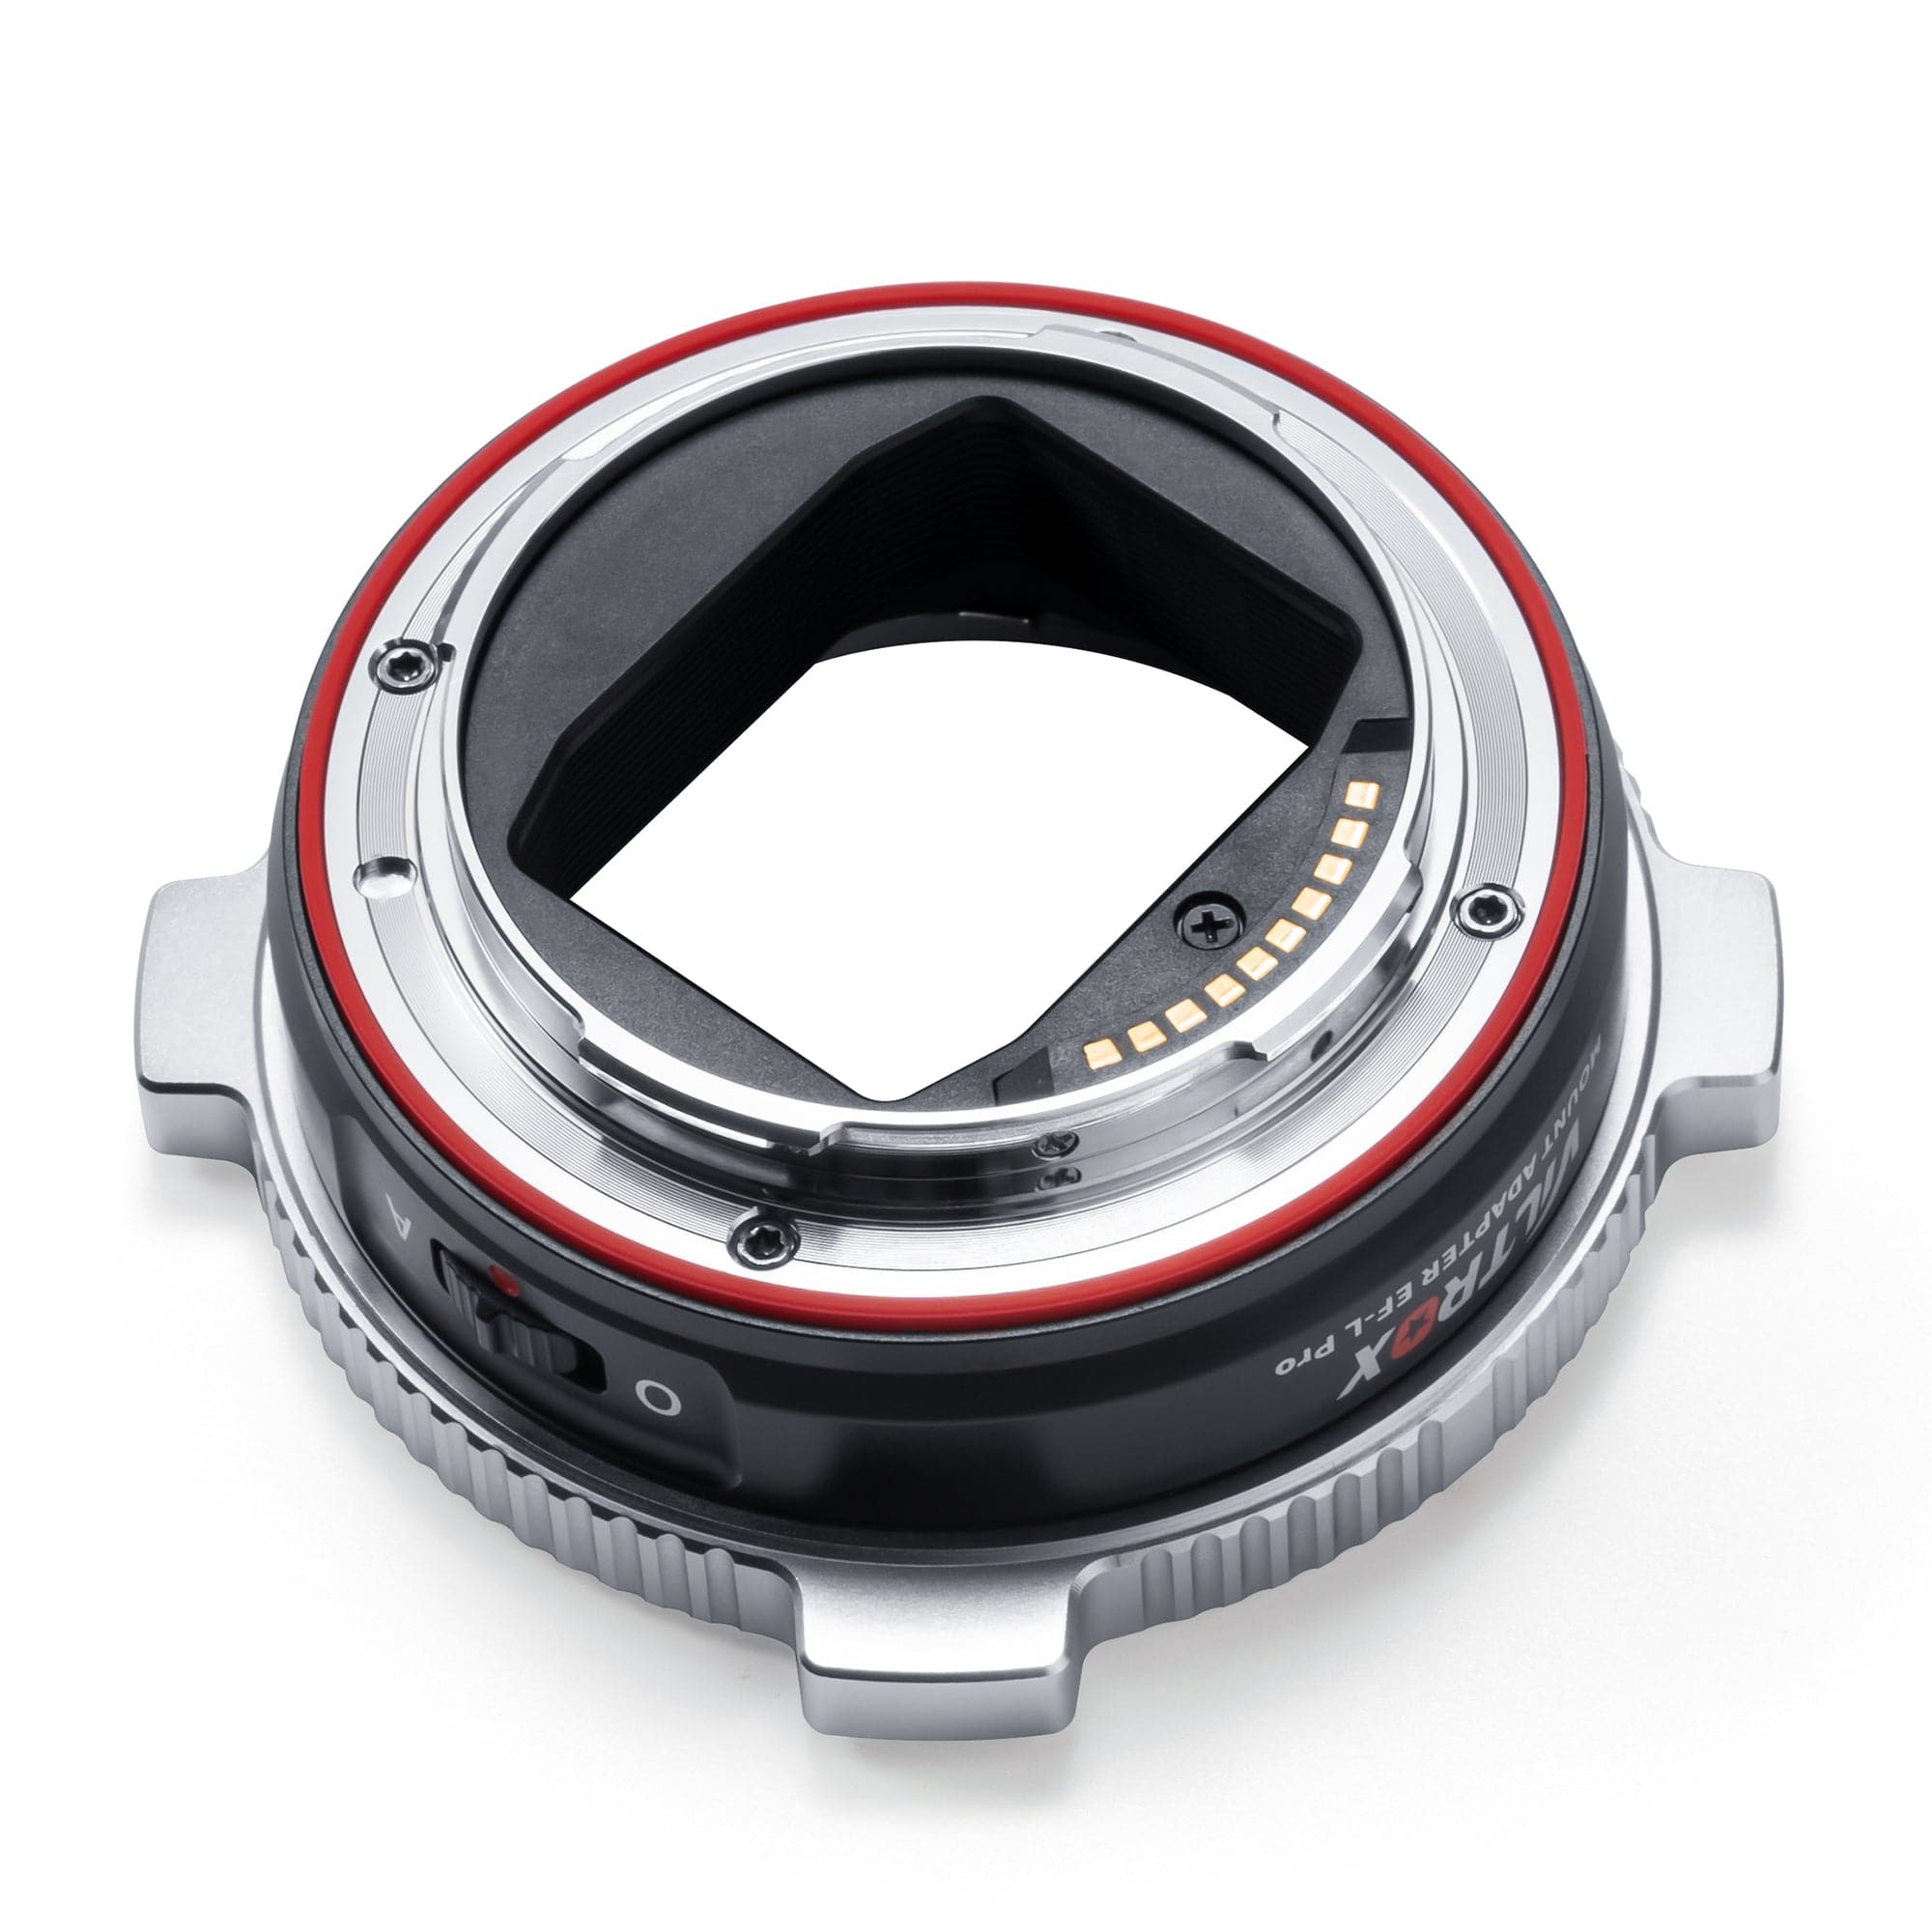 Viltrox Upgraded Pro Version EF-L AF Mount Adapter For EF/EF-S Lens Pair with Leica/Panasonic/Sigma L-mount Cameras with Positive-lock EF Lens Mount